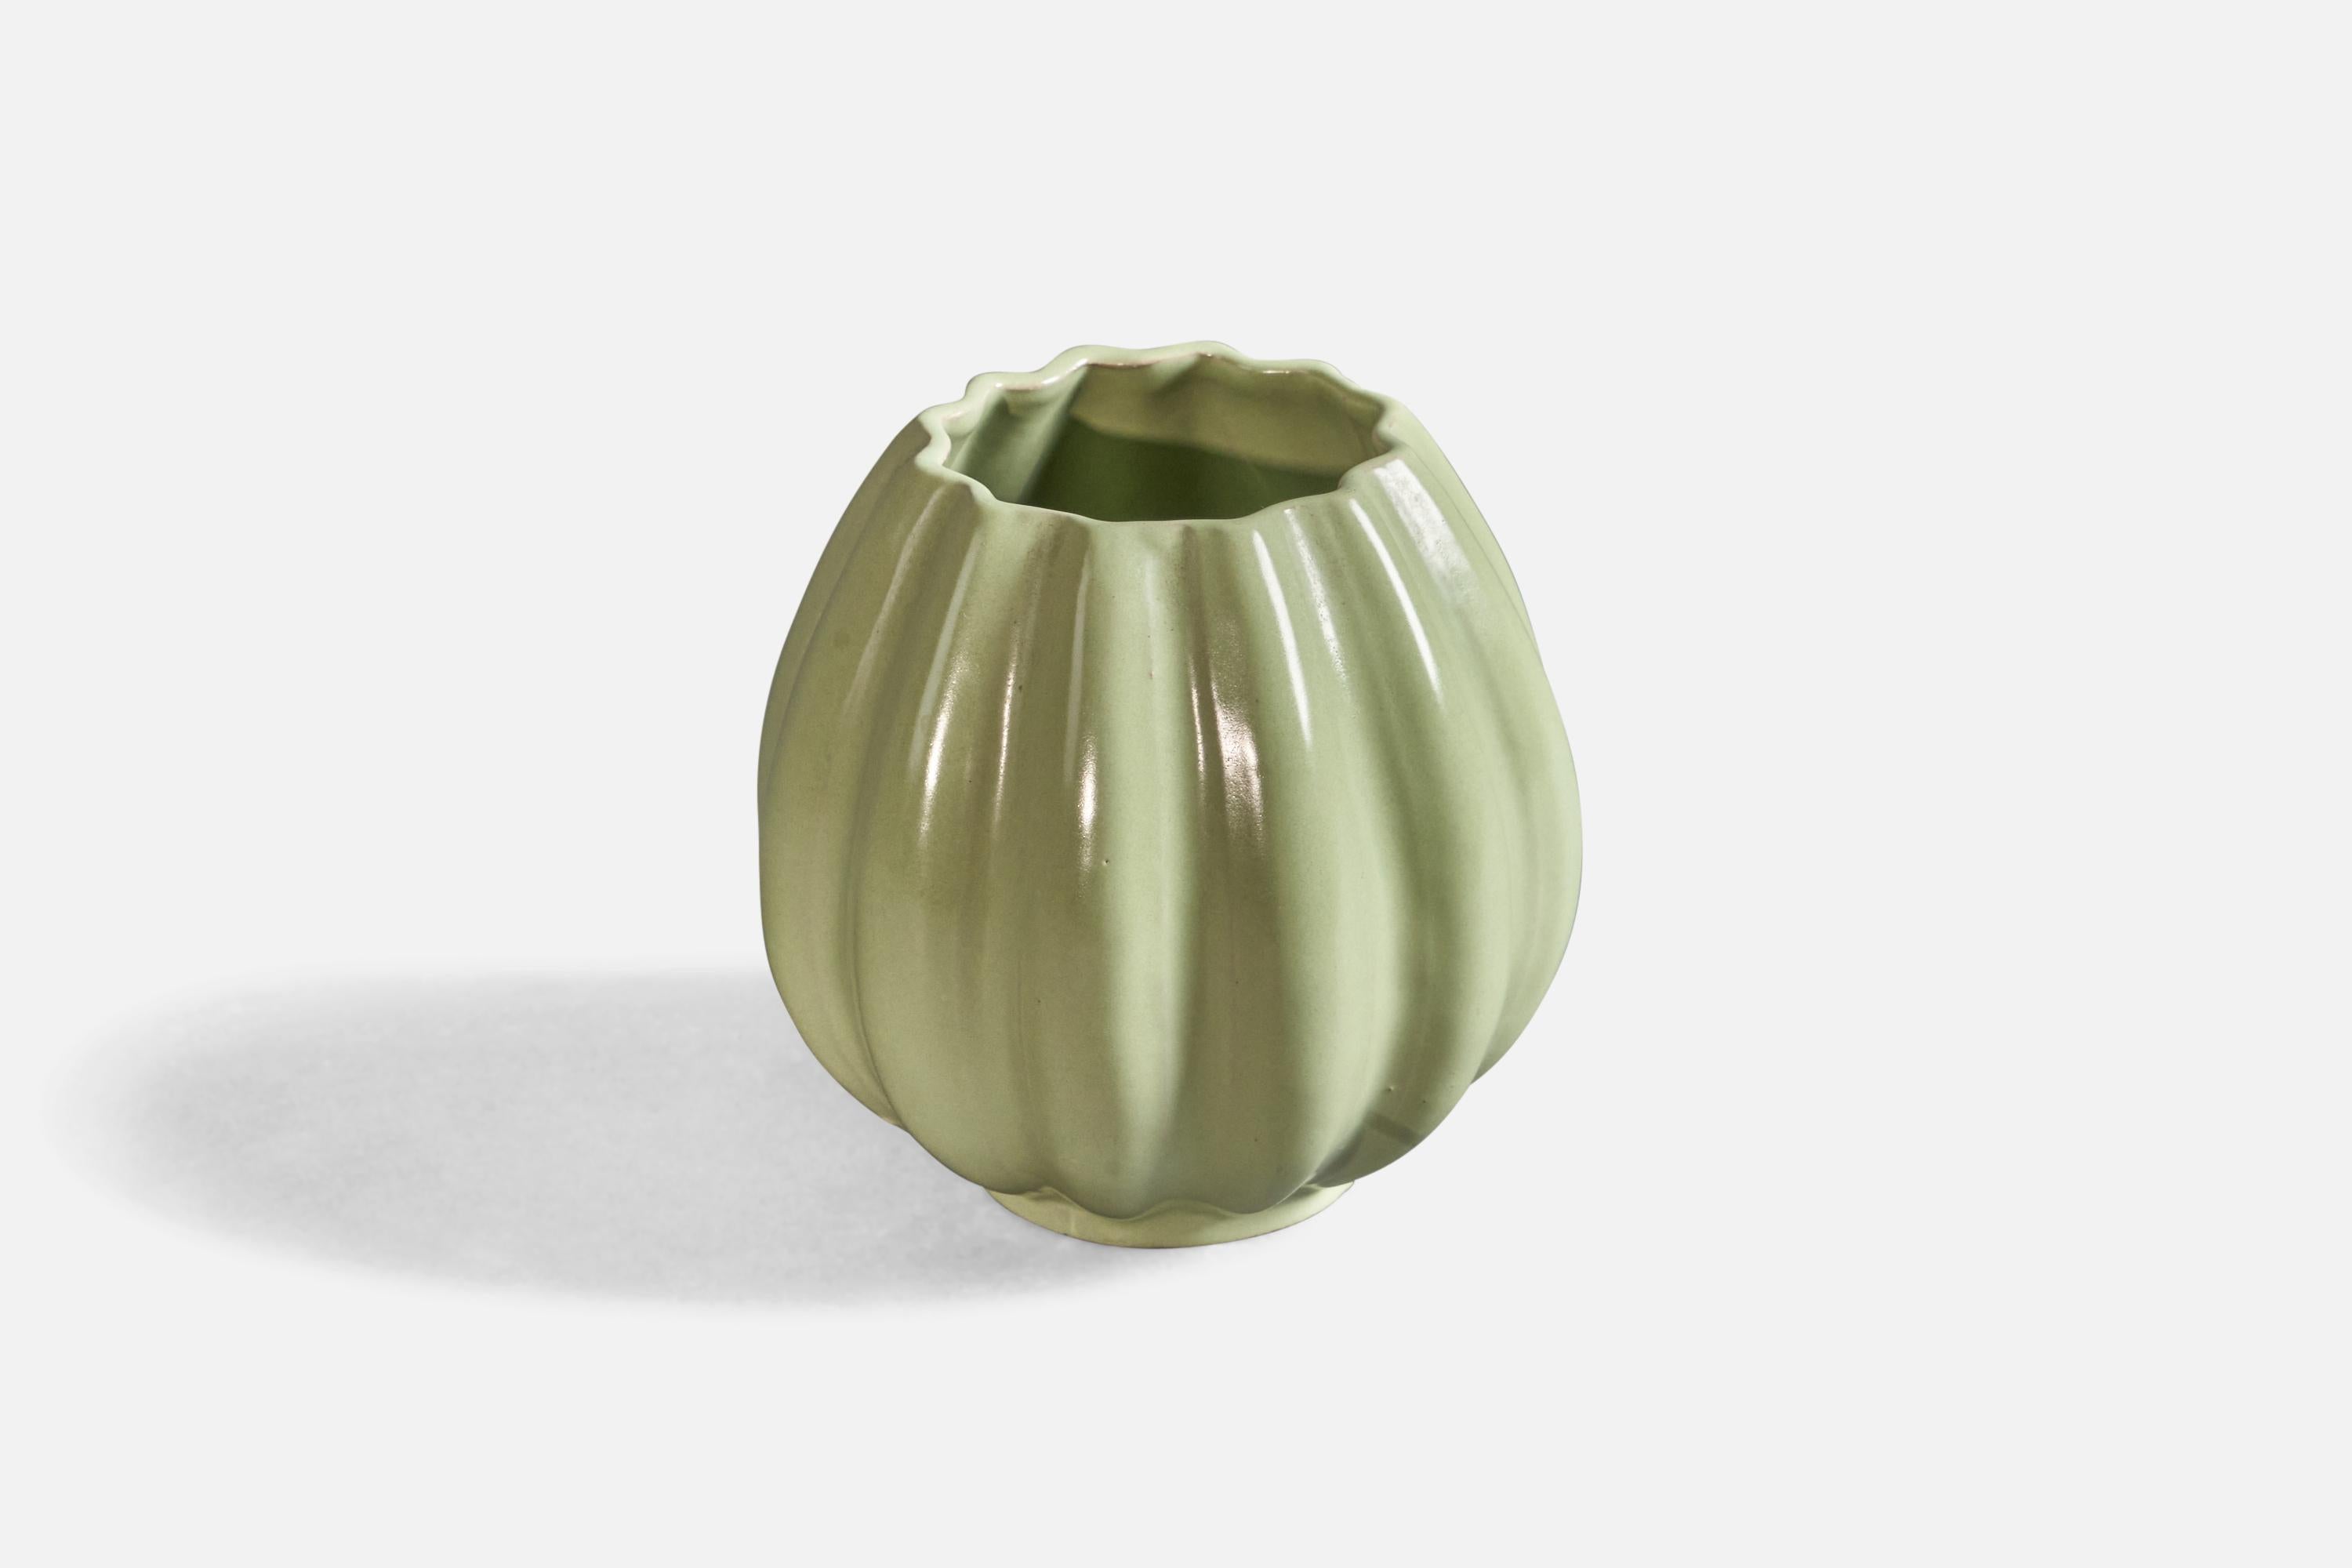 A celadon green-glazed and fluted earthenware vase, designed and produced by Upsala Ekeby, Sweden c. 1930s.